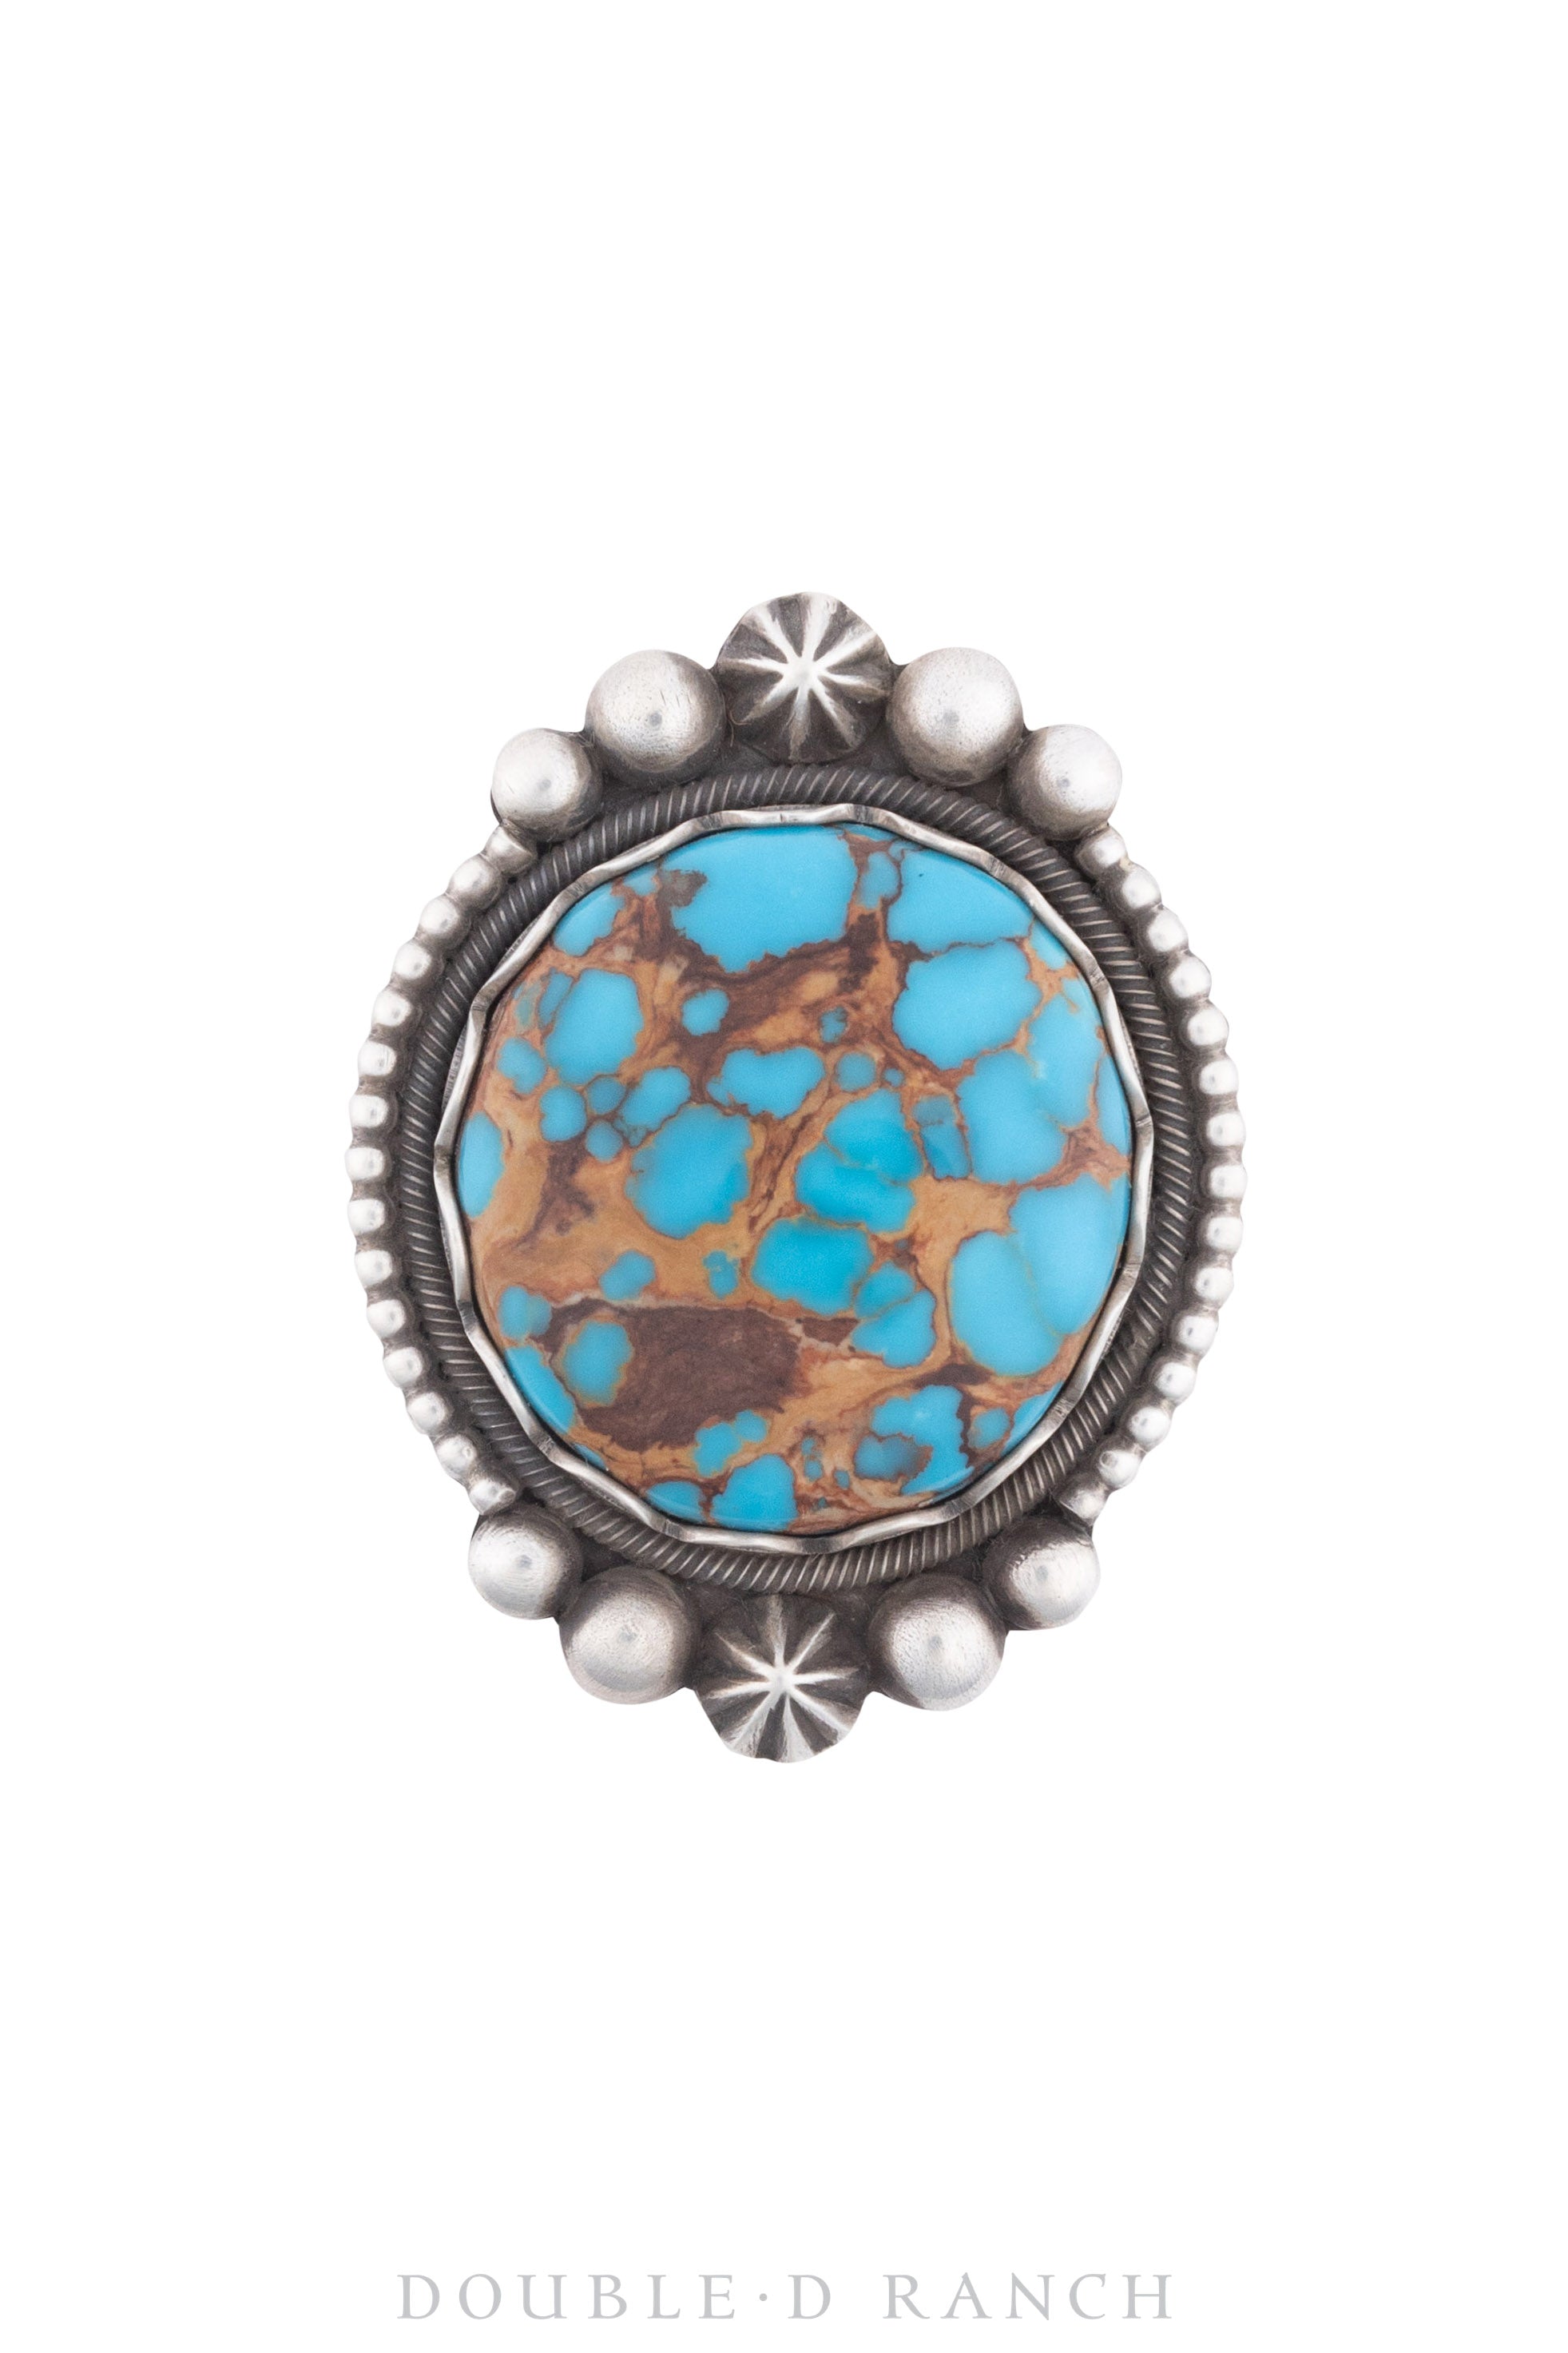 Ring, Natural Stone, Turquoise, Hallmark, Vintage, 1338